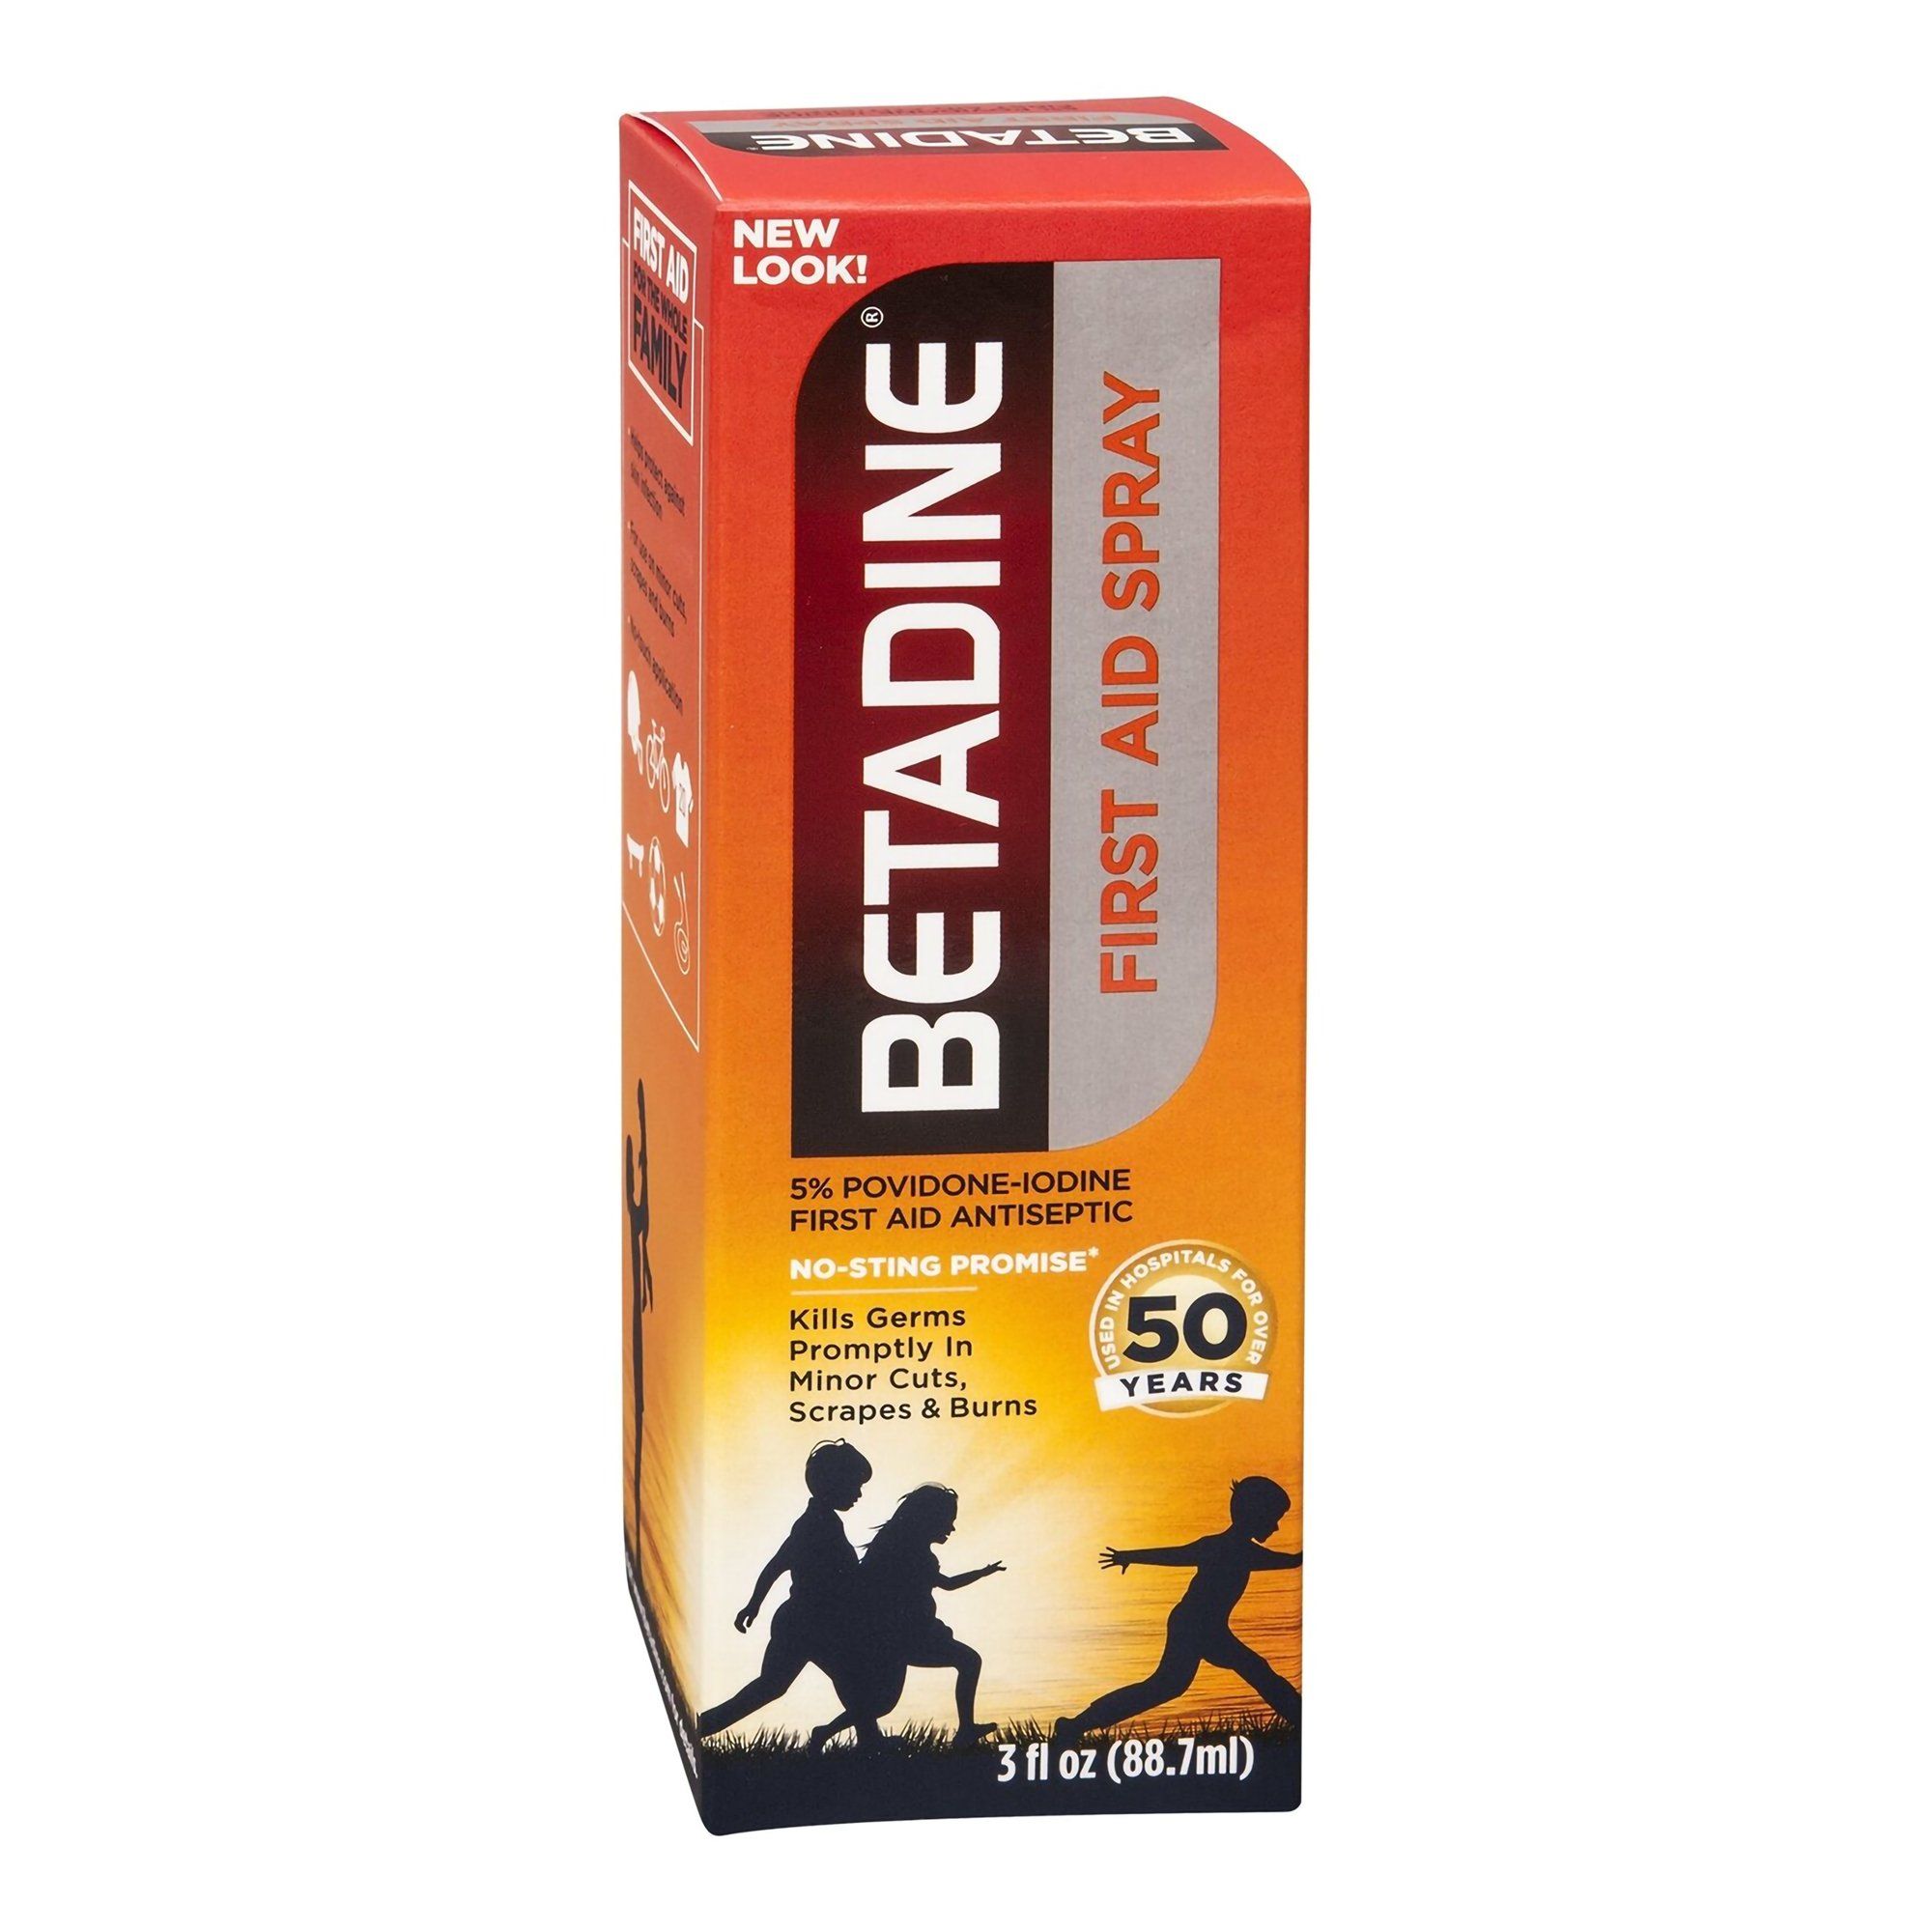 Betadine Antiseptic Topical First Aid Spray - 3 fl oz